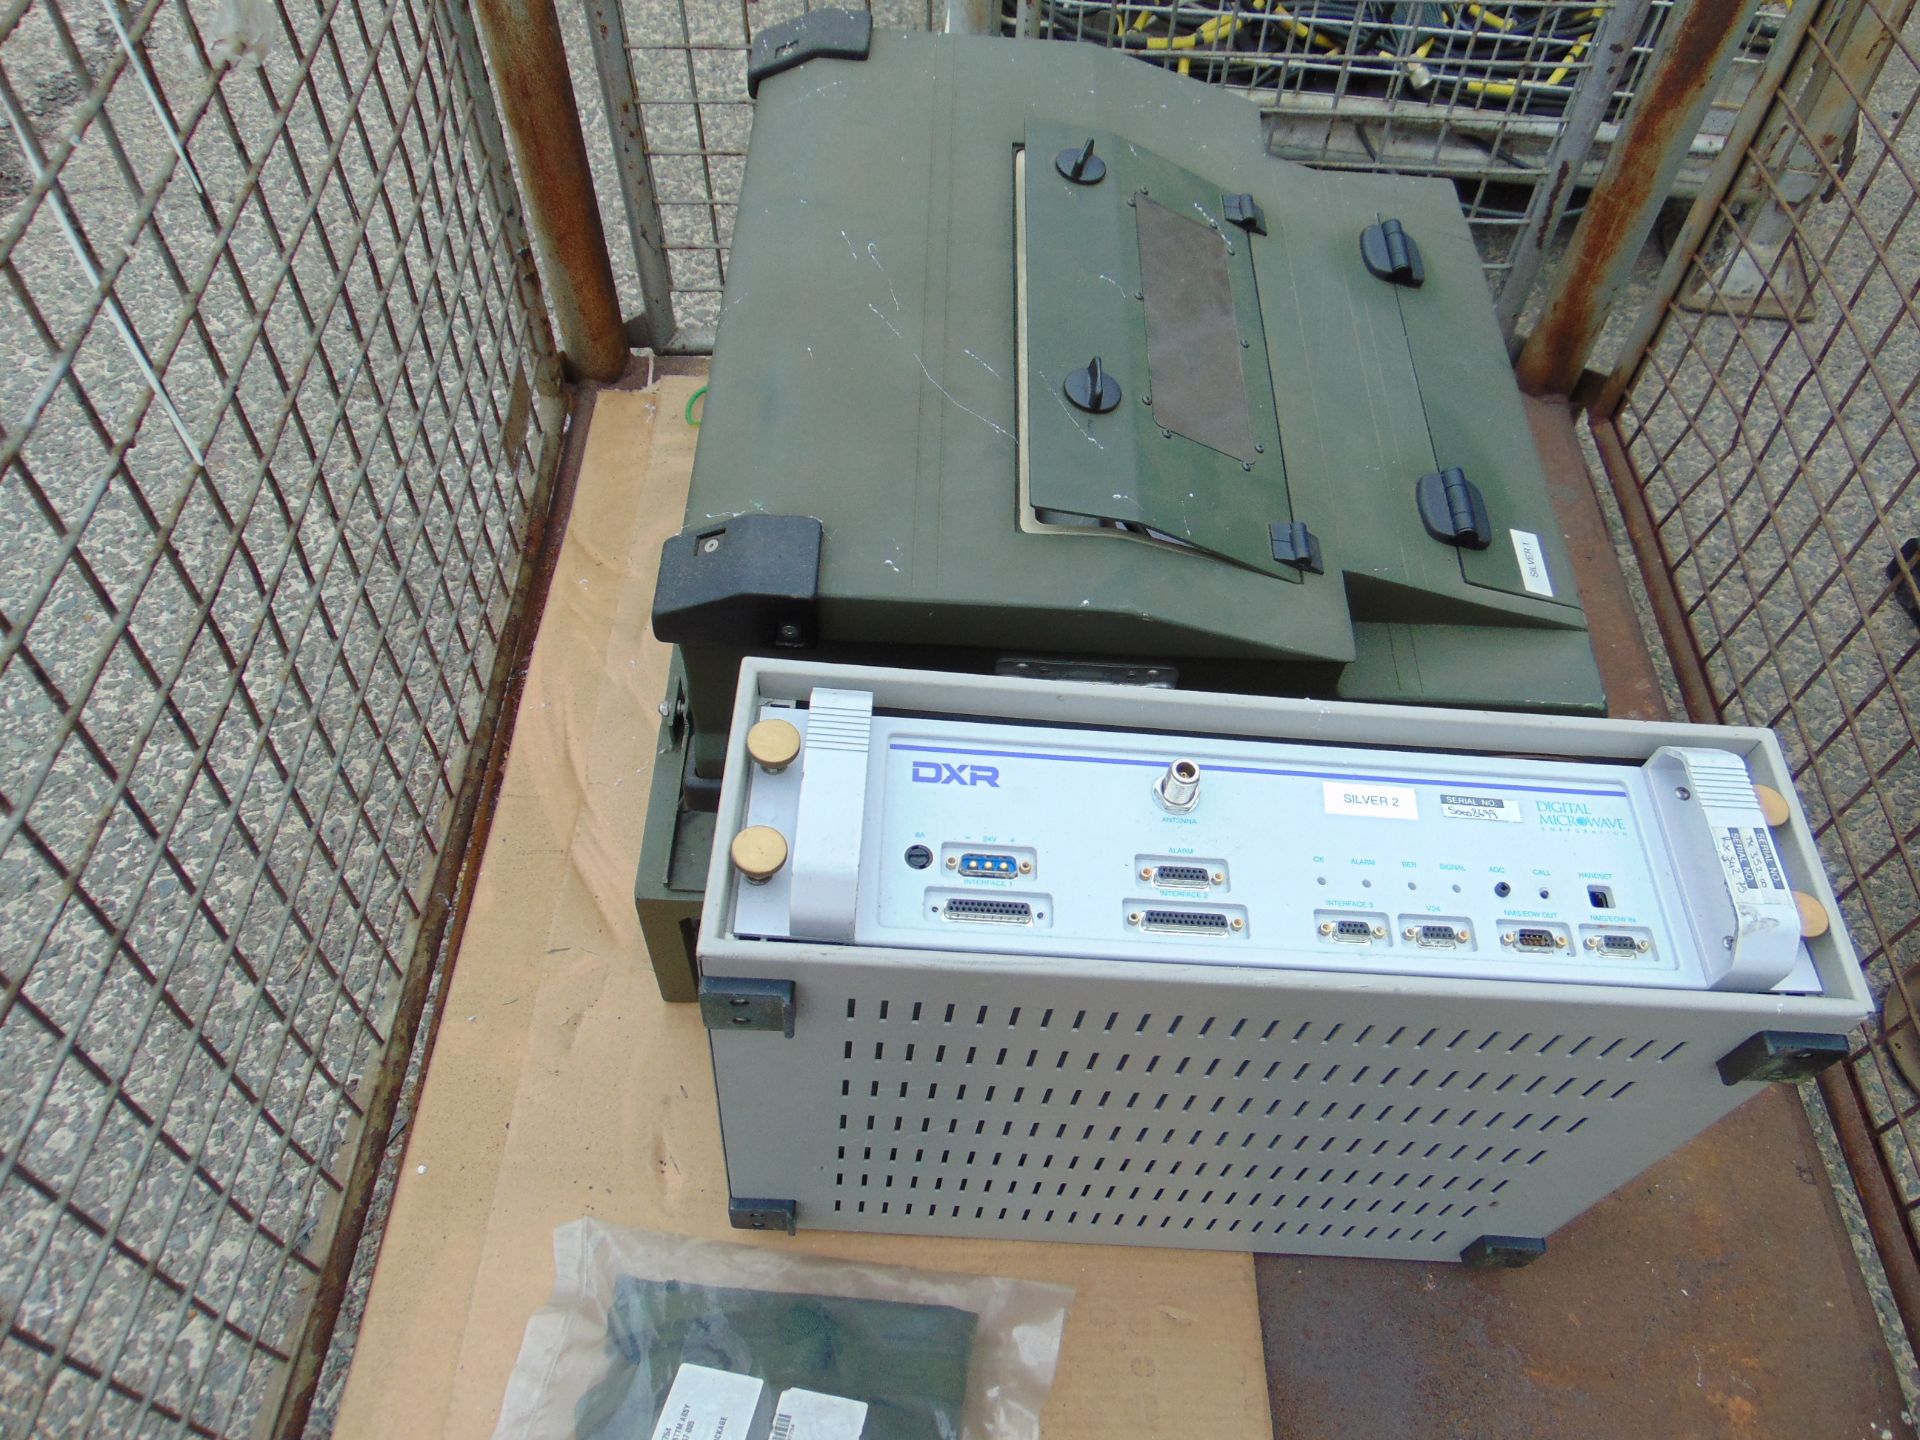 HP Desk Jet 690C Rugged issued Printer and DXR Radio Unit - Image 3 of 4